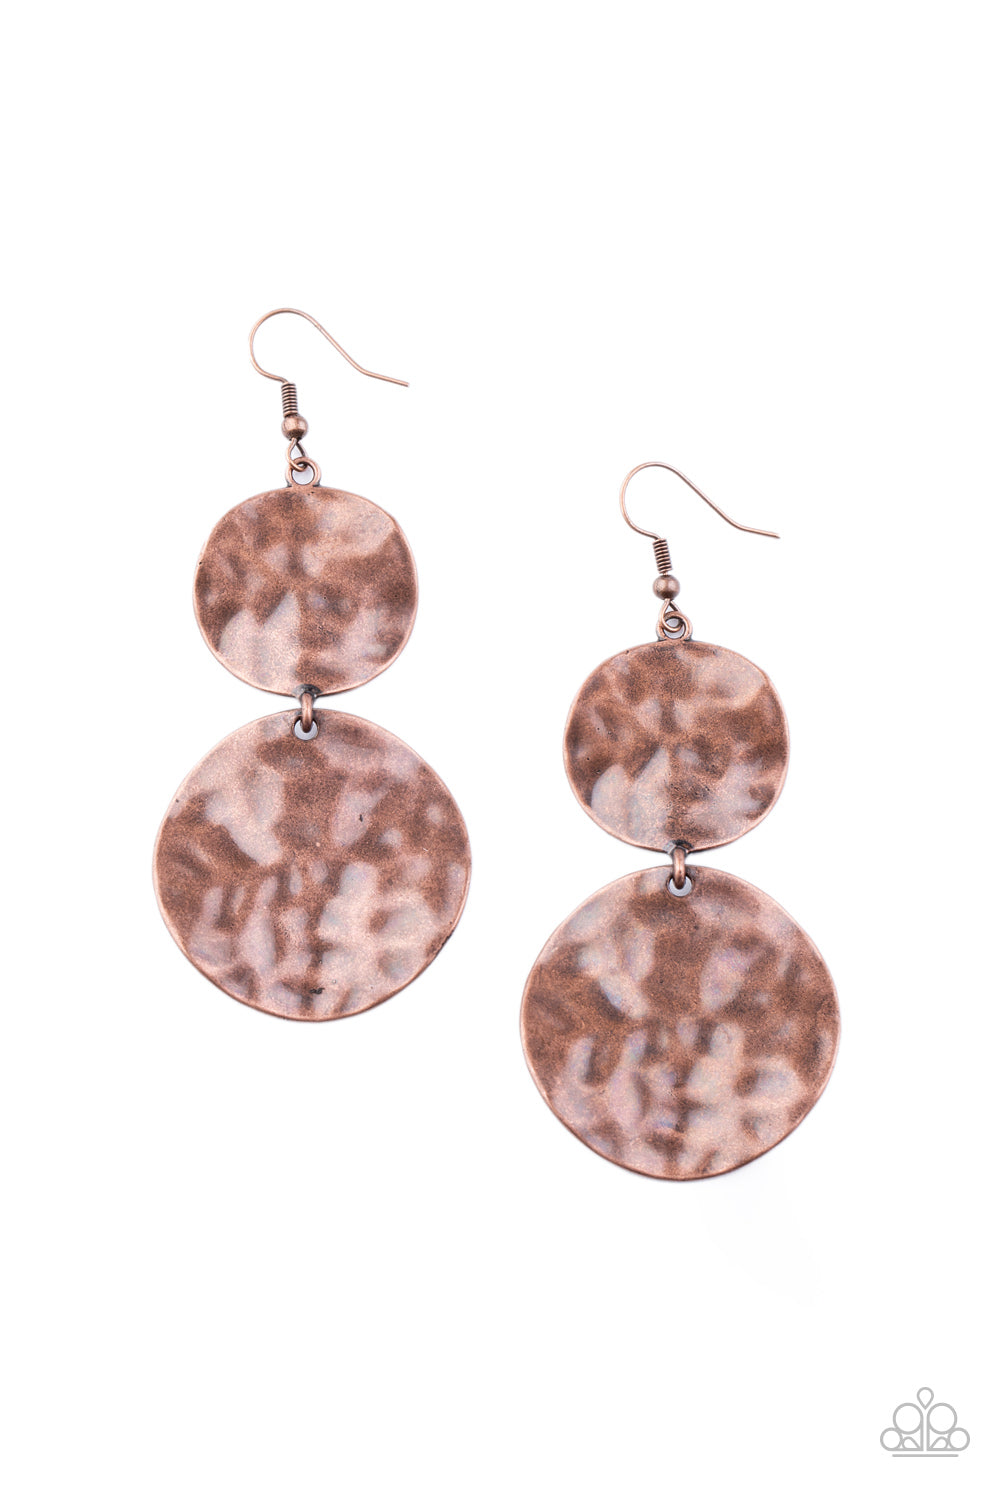 HARDWARE-Headed - Copper Earrings - Princess Glam Shop